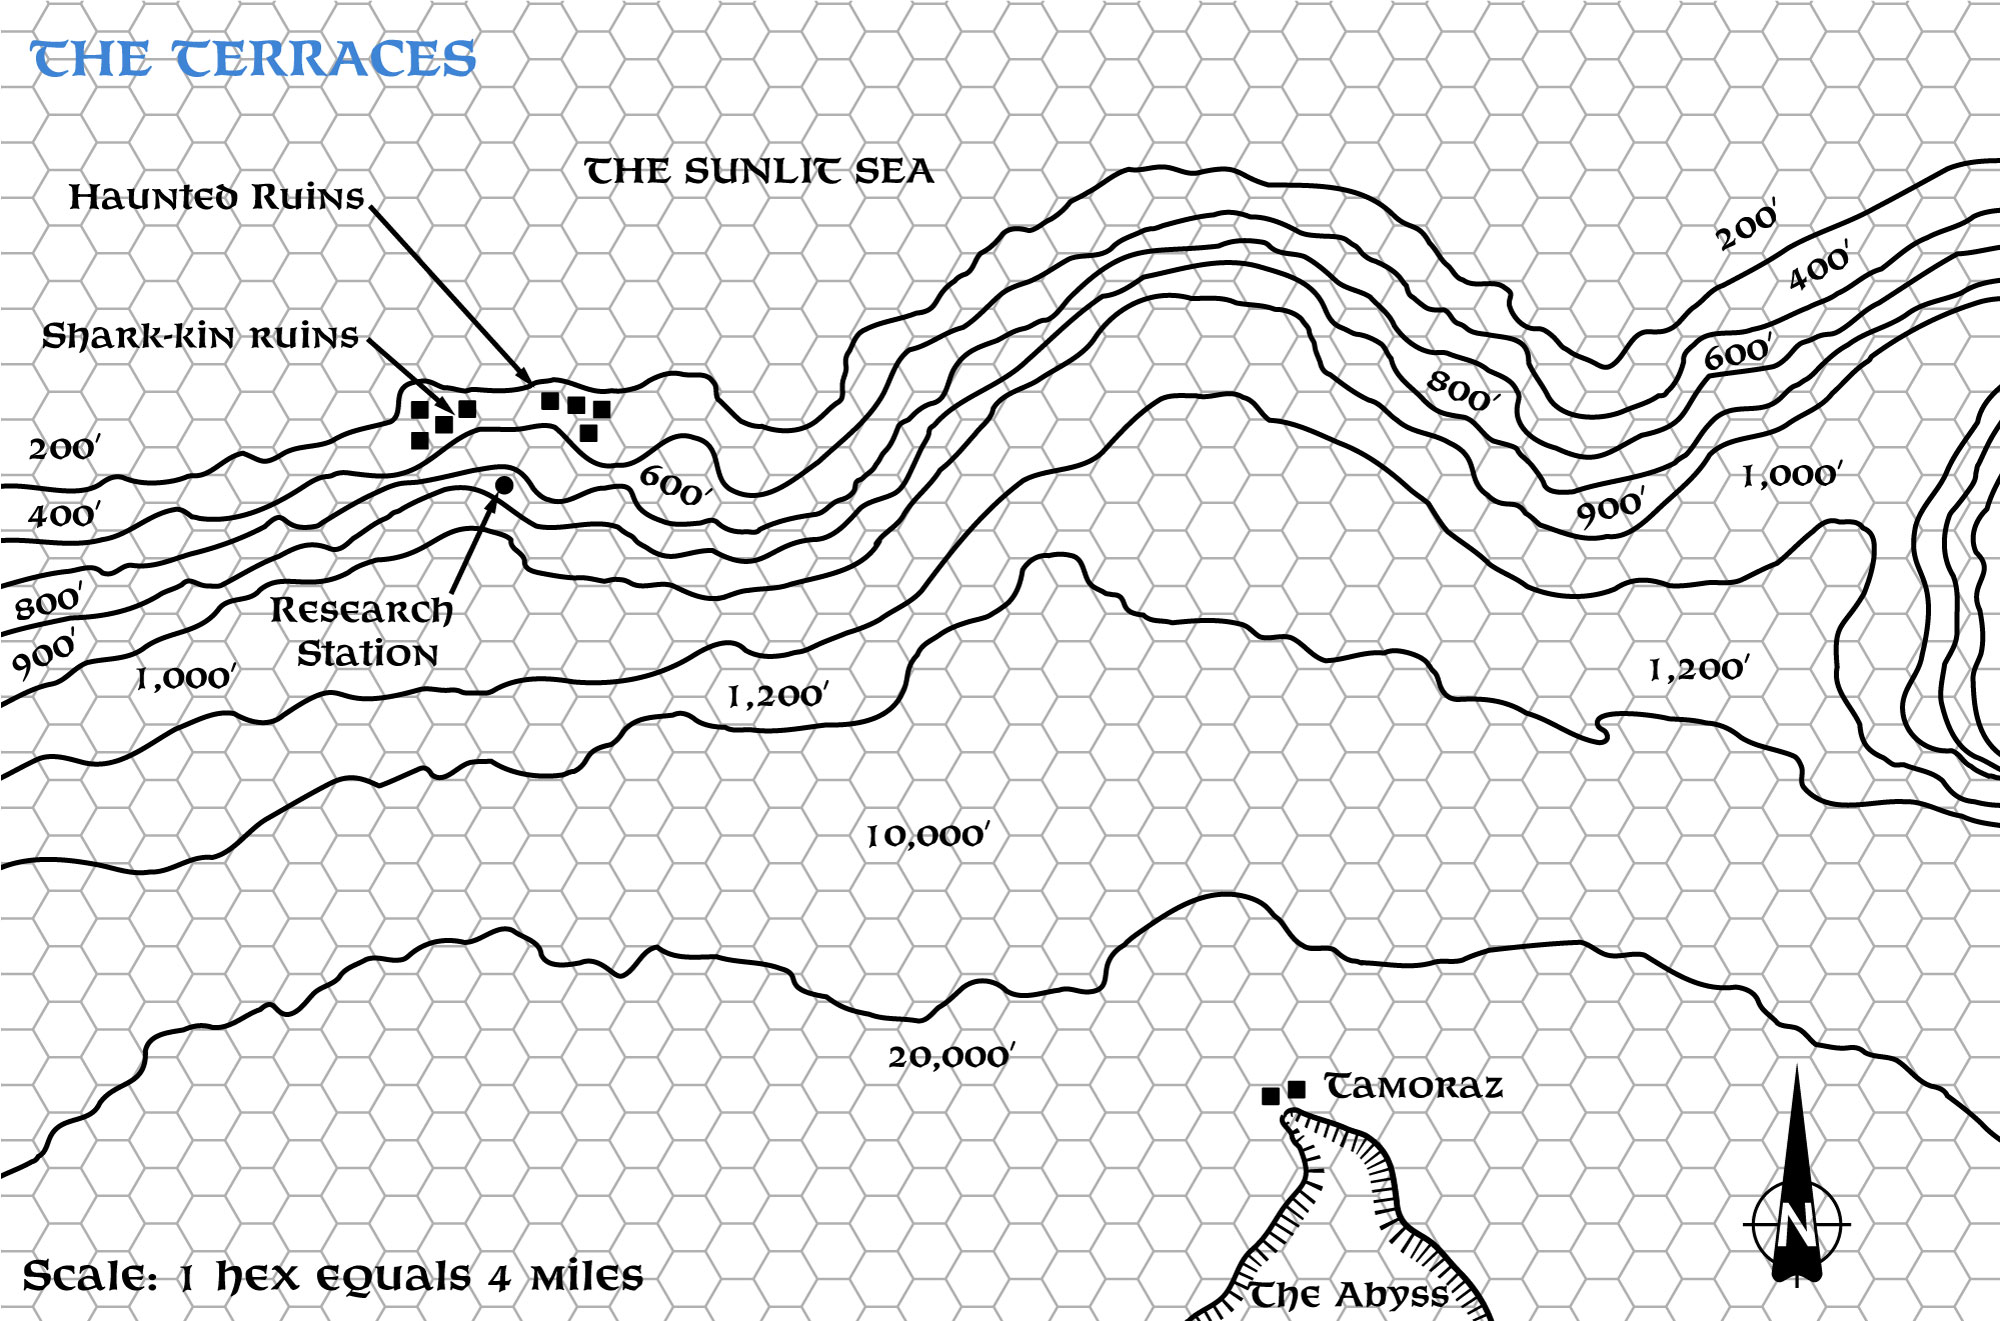 Replica of PC3’s map of The Terraces, 4 miles per hex